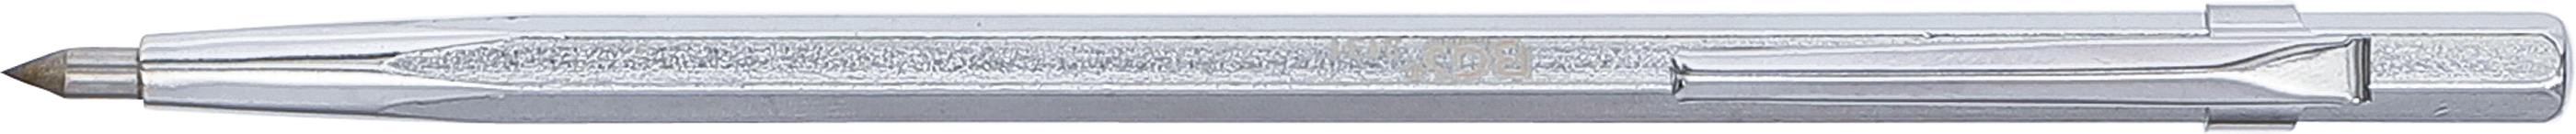 BGS Anreißnadel mit Hartmetallspitze | 150 mm